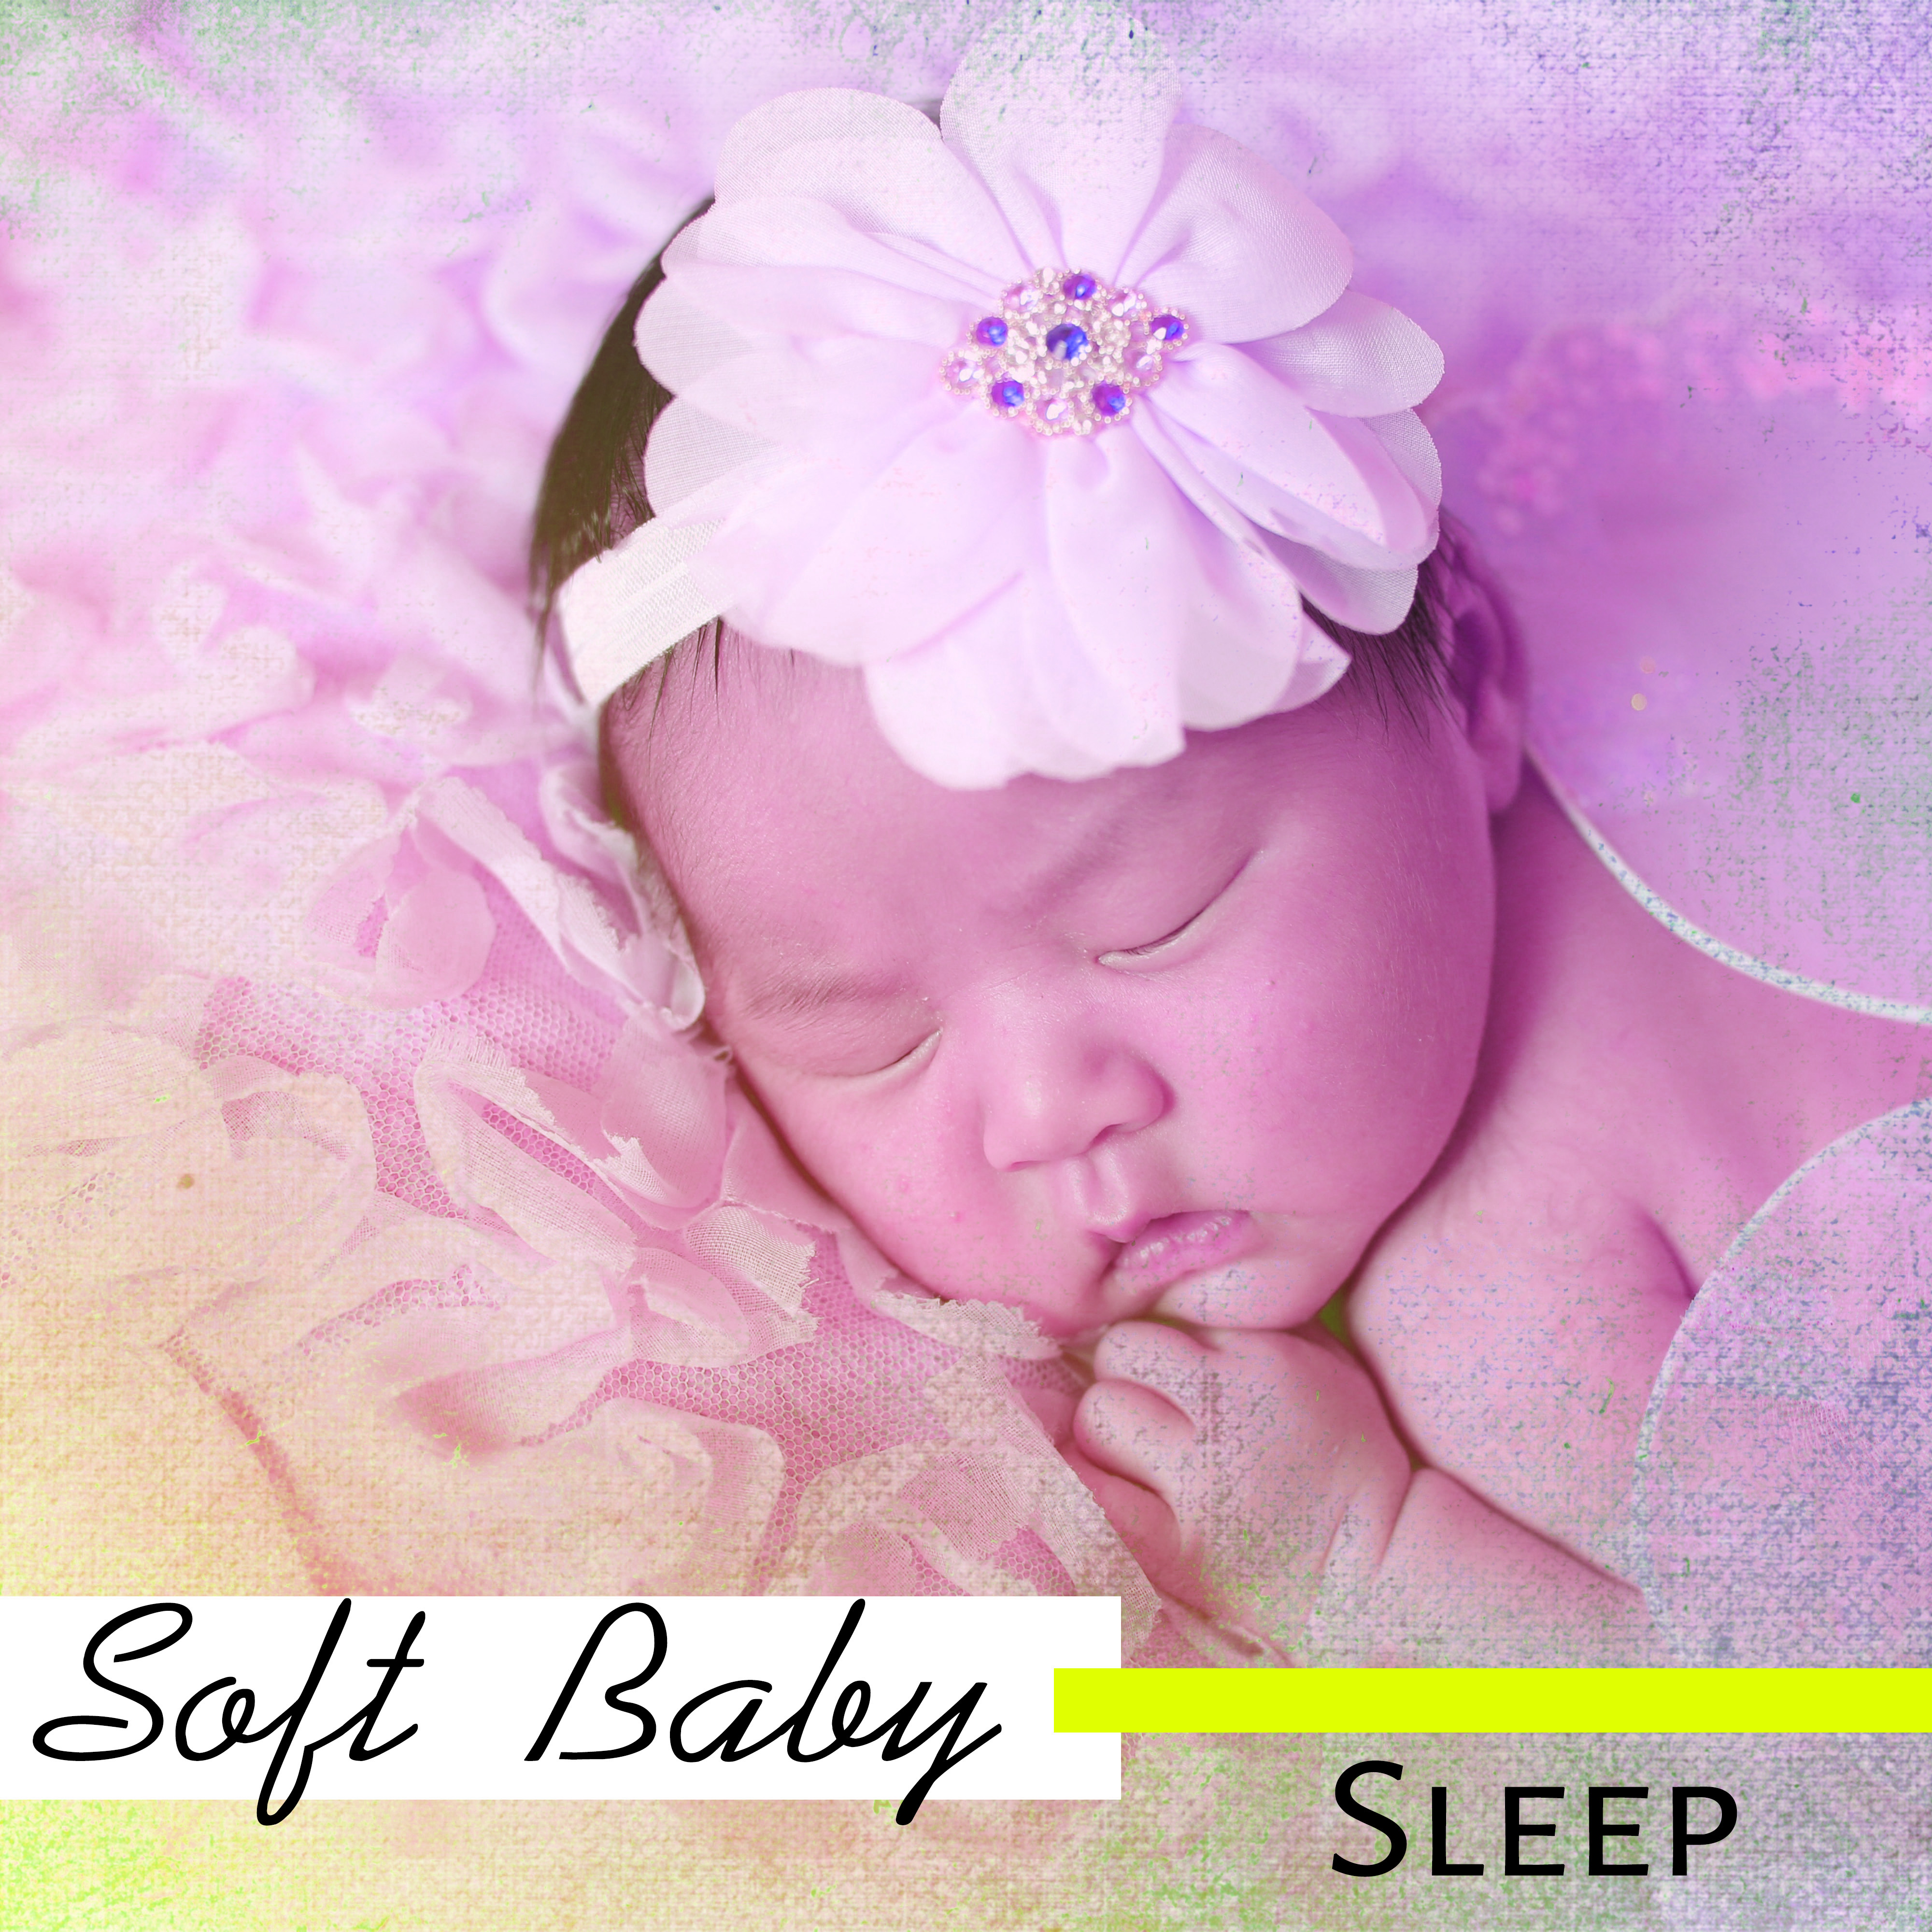 Soft Baby Sleep – Sweet Dreams My Darling, Soft New Age Music for Baby, Sleep Well, Calm Night